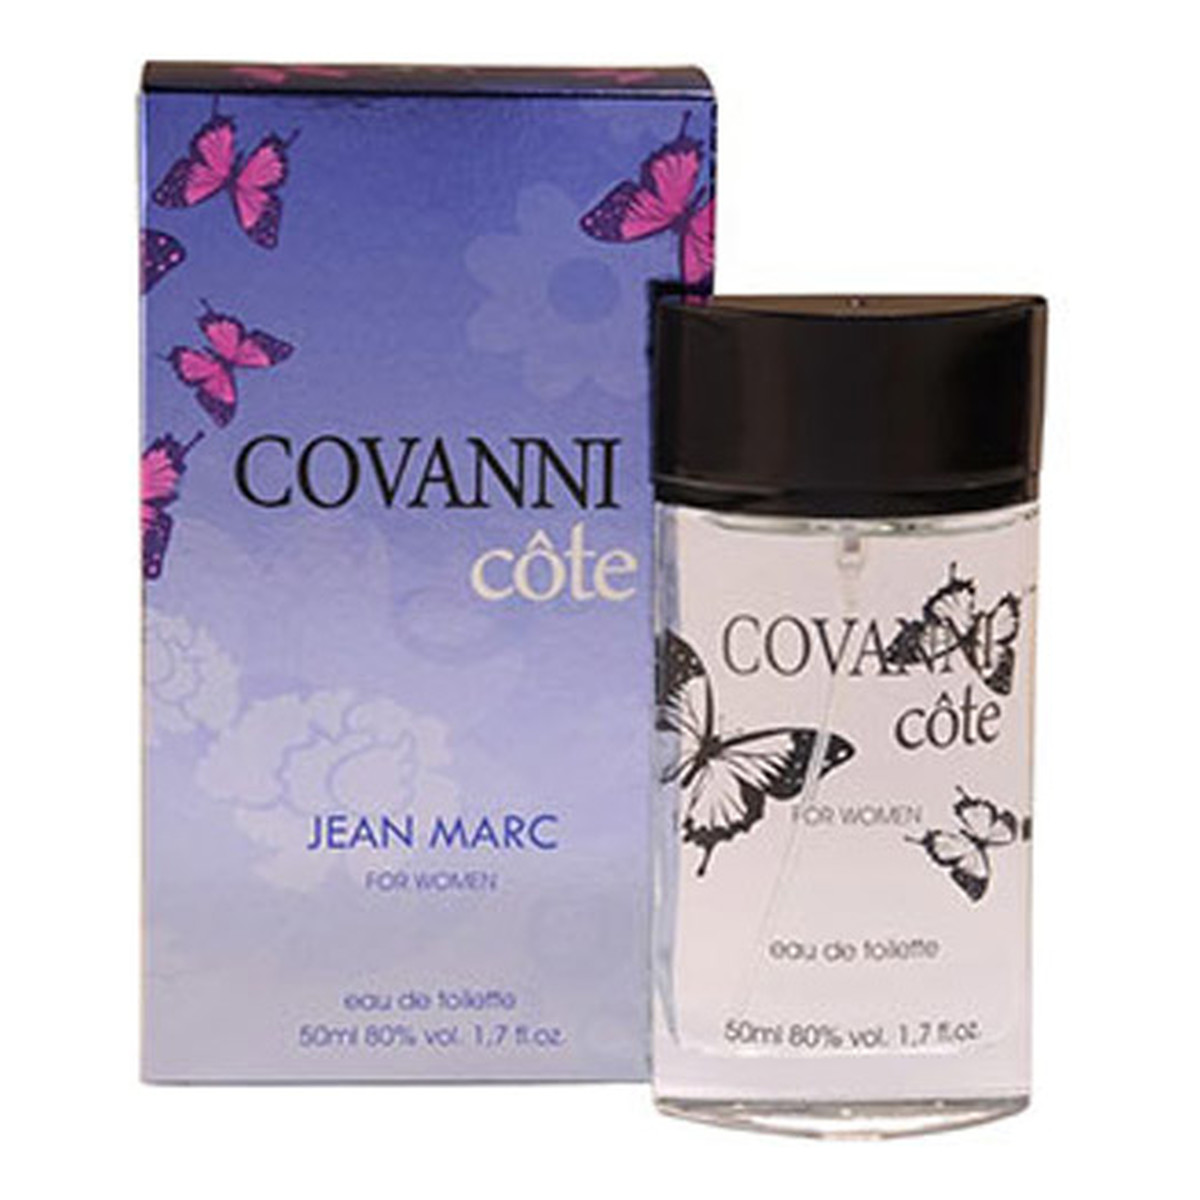 Jean Marc Covanni Cote For Women Woda perfumowana spray 50ml